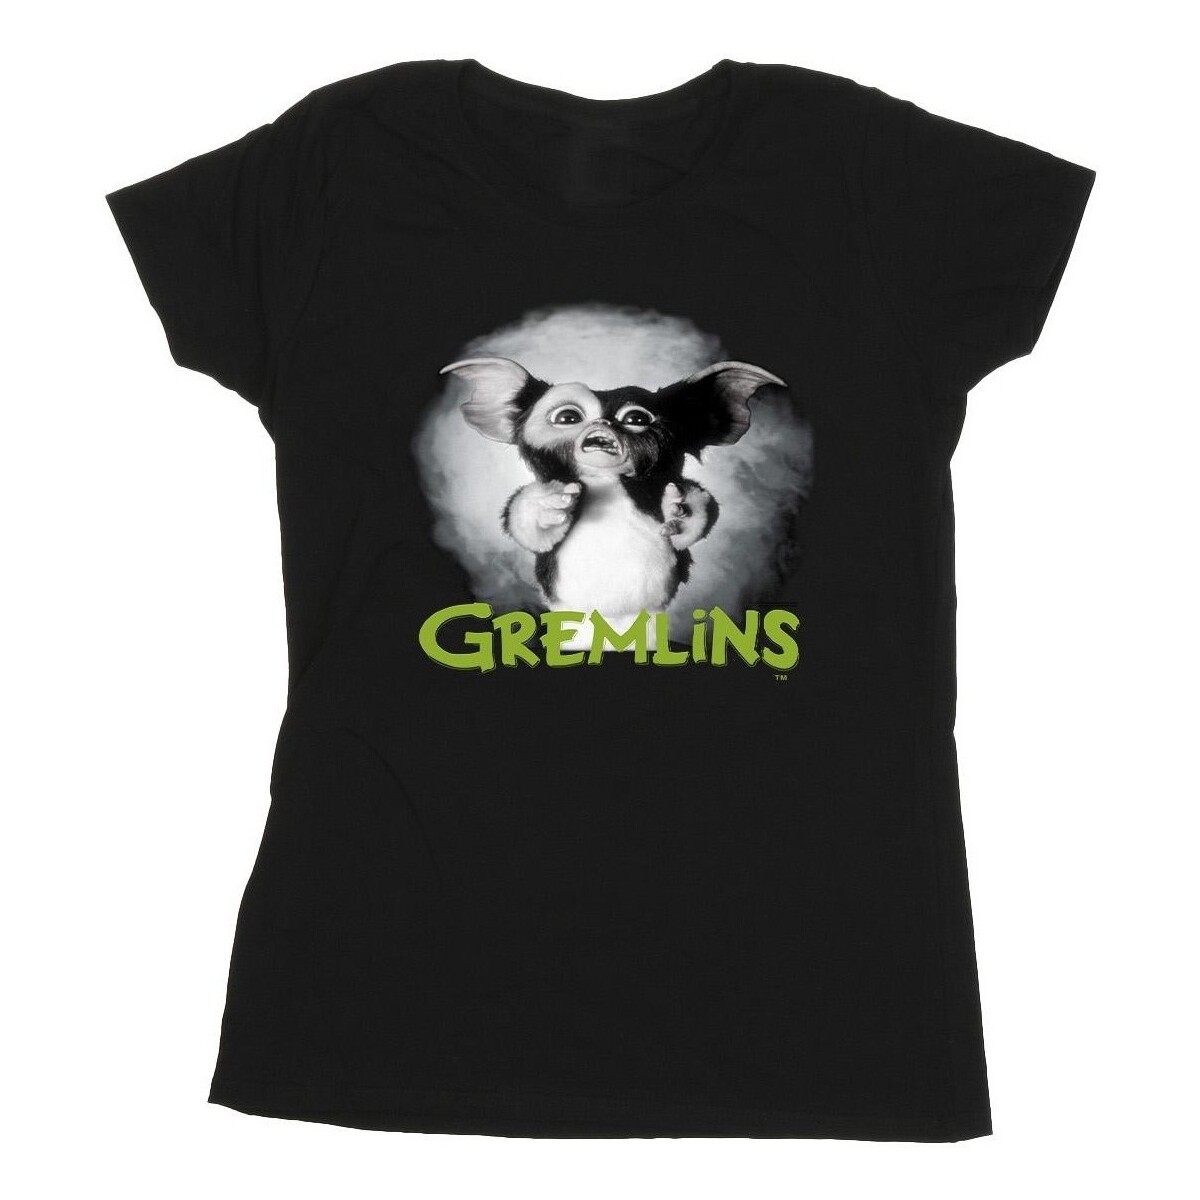 Vêtements Femme T-shirts manches longues Gremlins Scared Green Noir